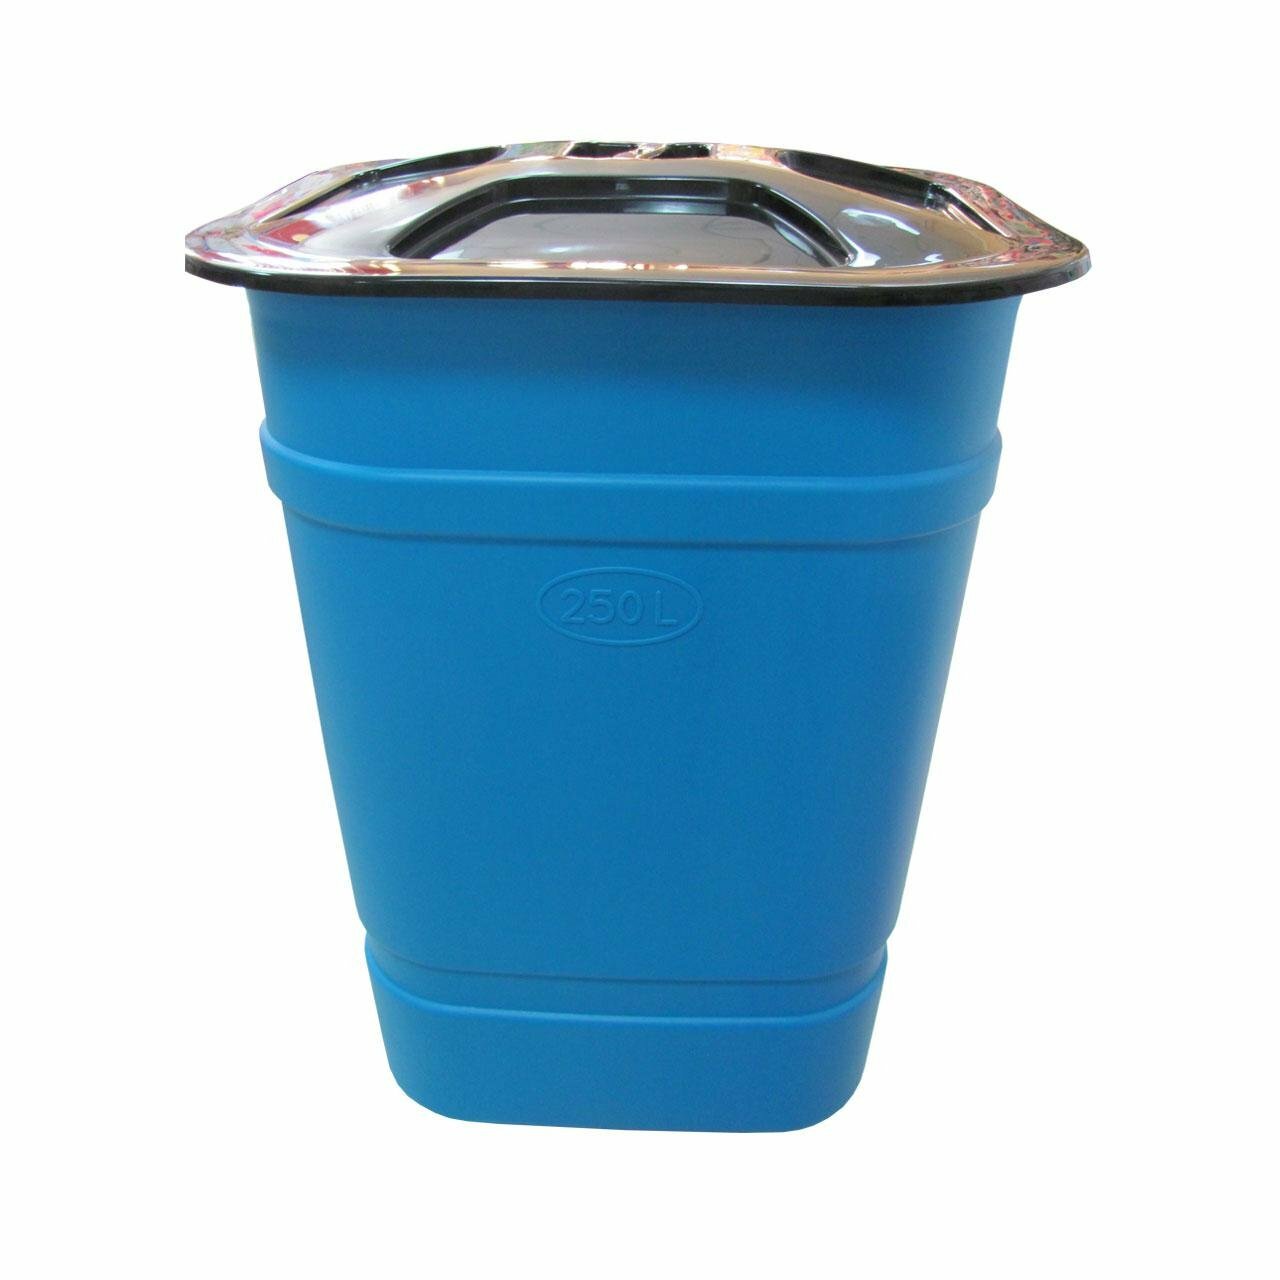 Бочка-бак для воды с крышкой, объем 250 л, материал пластик, цвет синий